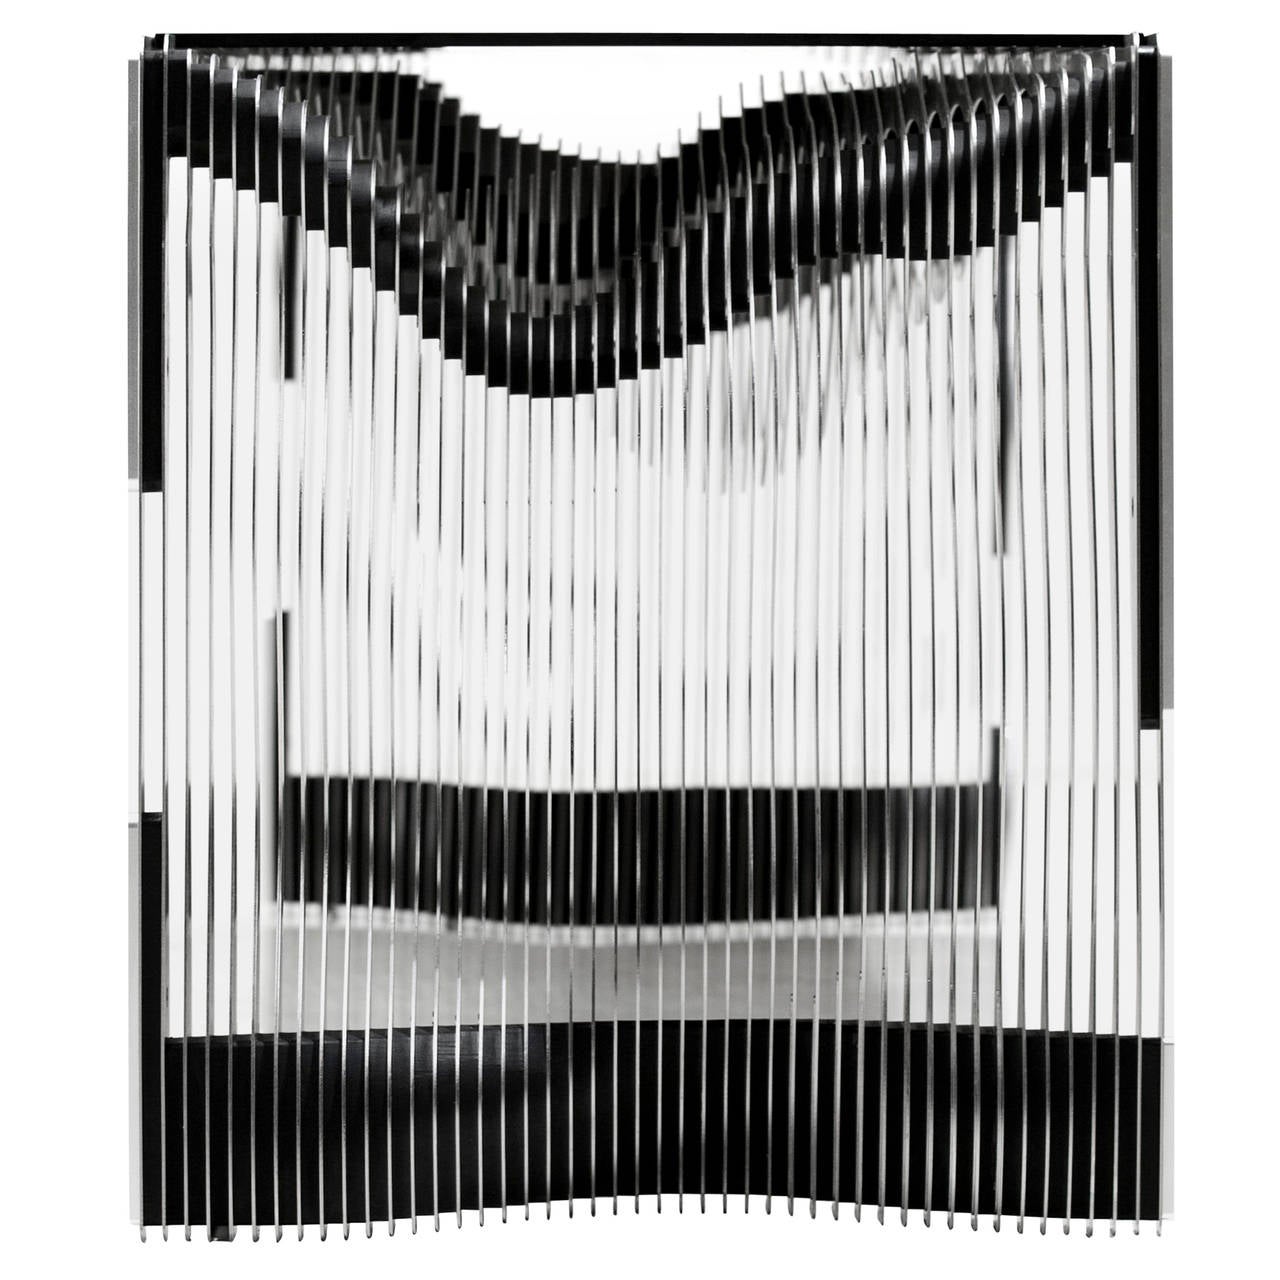 Kim Sang Hoon
Phenomena 2015-0001, 2015.
Luxteel, aluminum, wood and glass.
Measures: 210 W x 66 D x 80 H cm.
82.7 W x 26 D x 31.5 H inch.